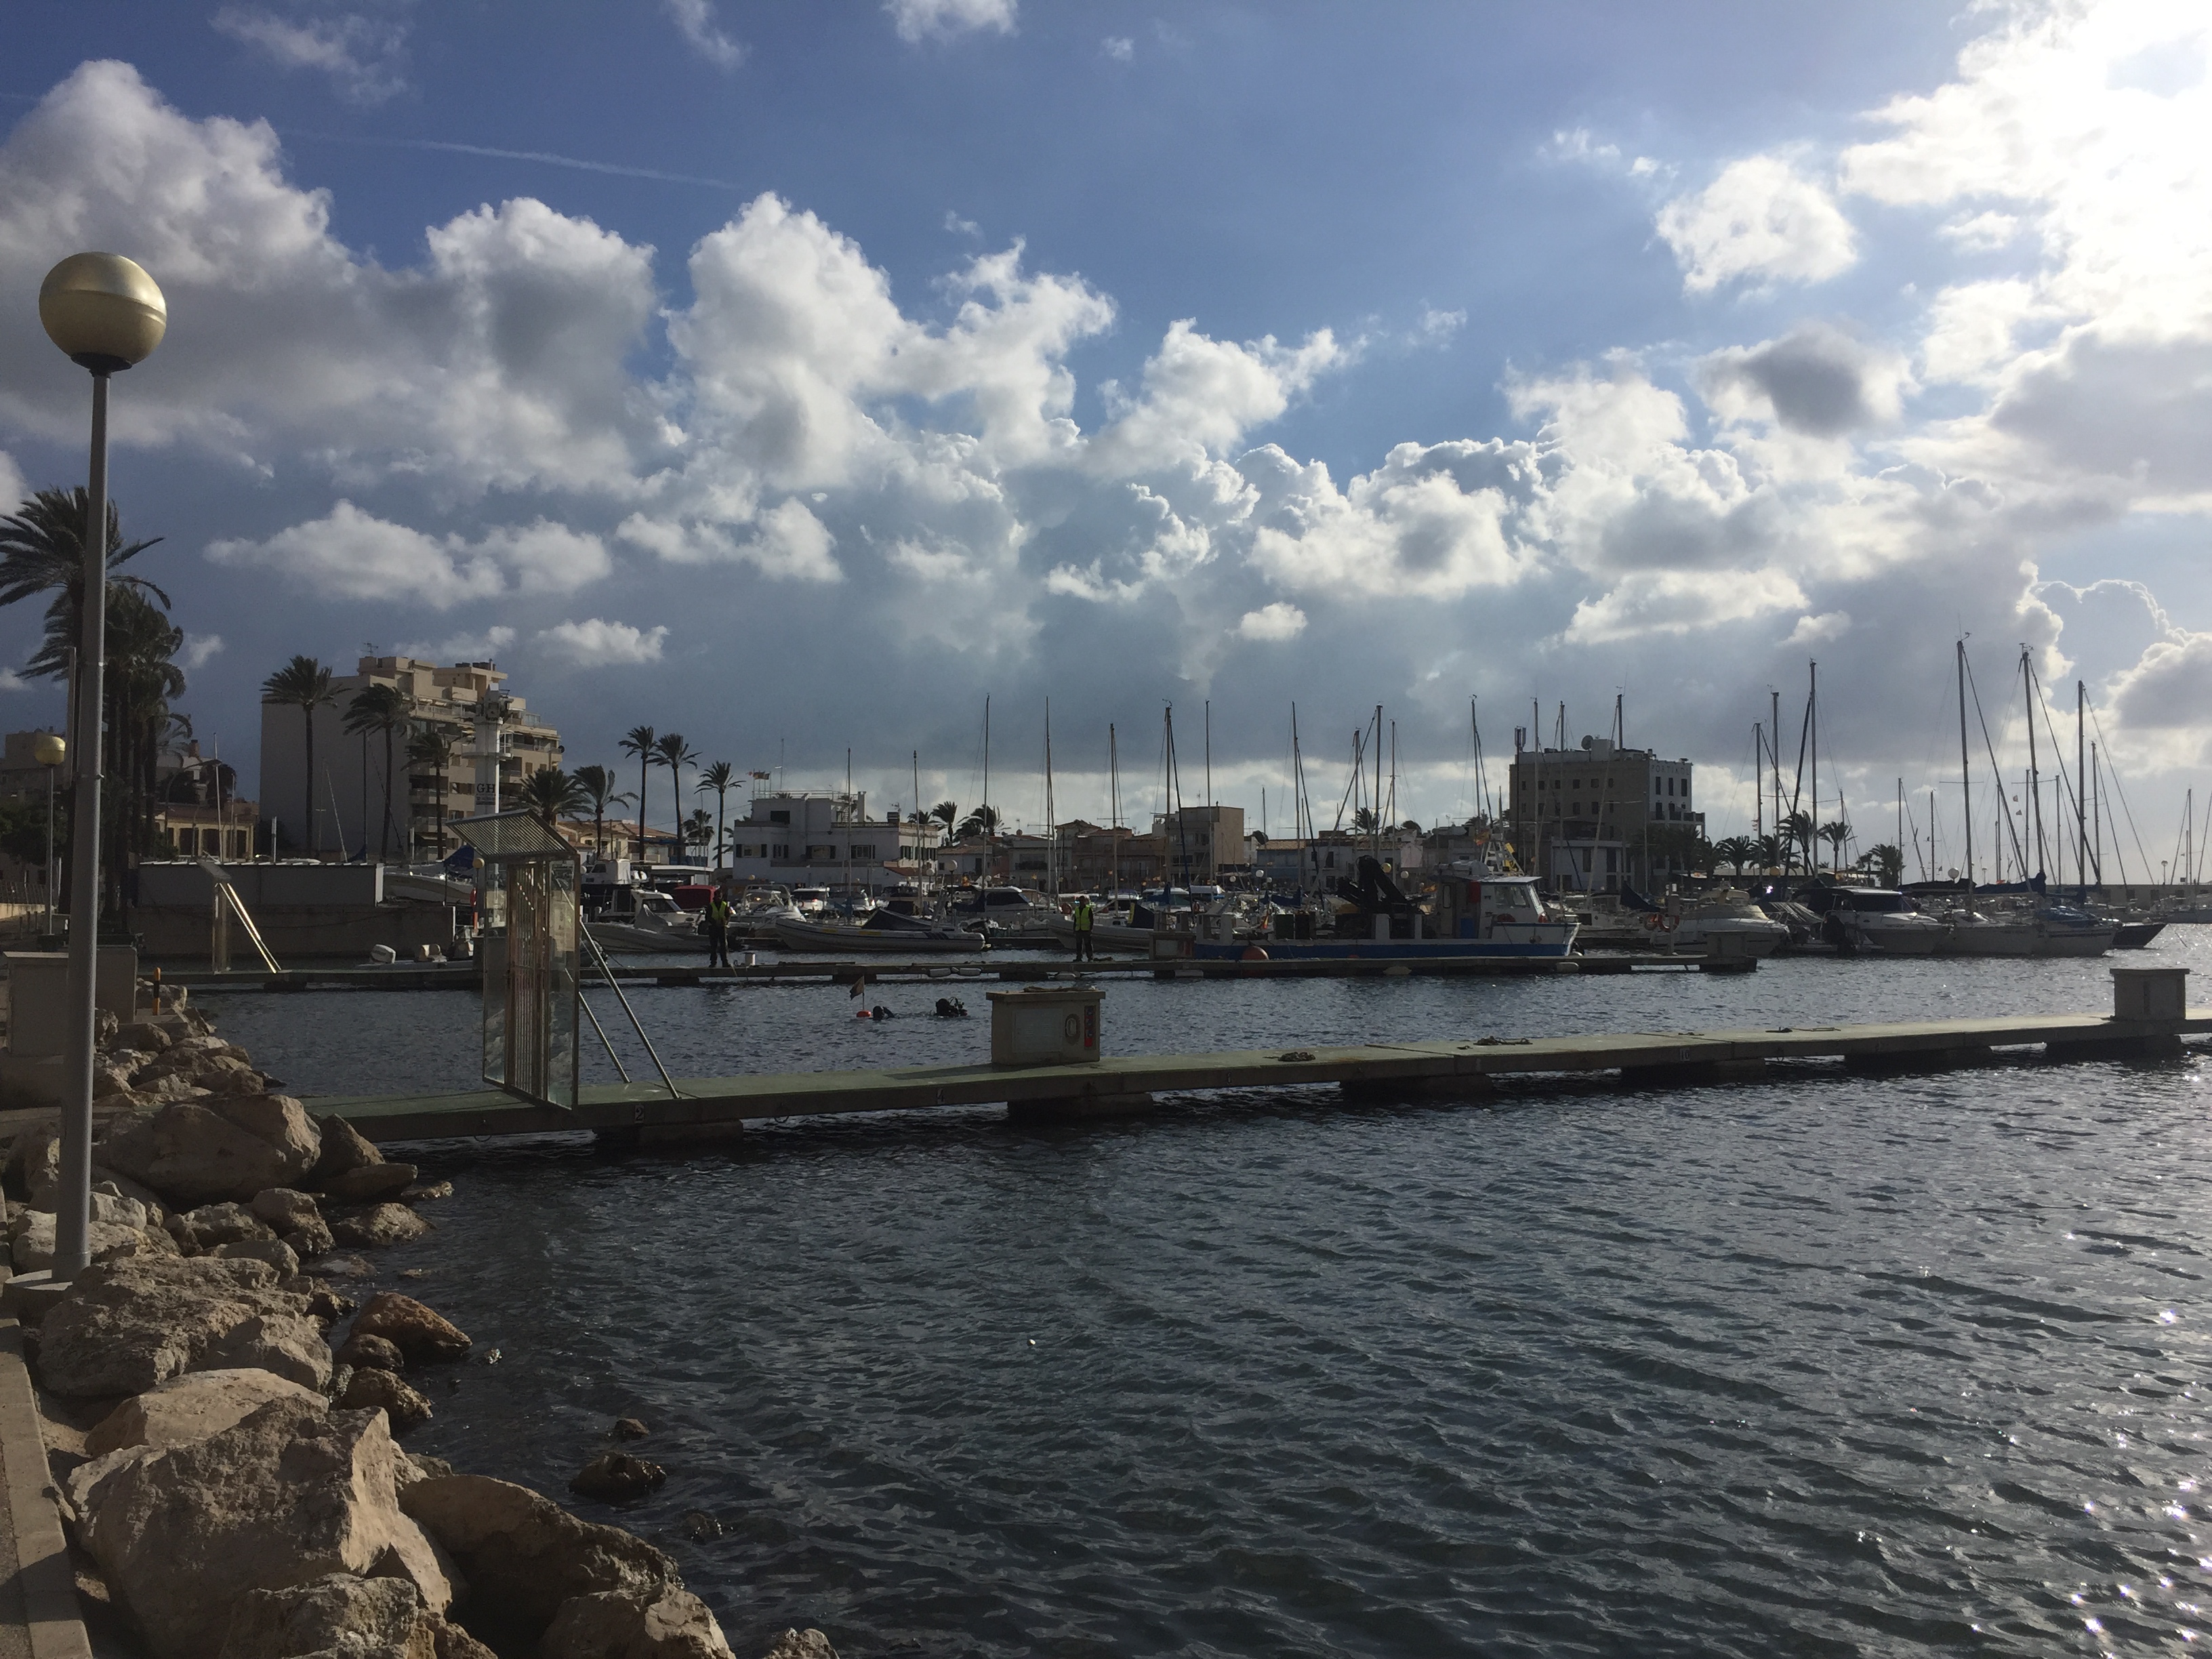 The APB adapts direct management berths at the Port of Palma